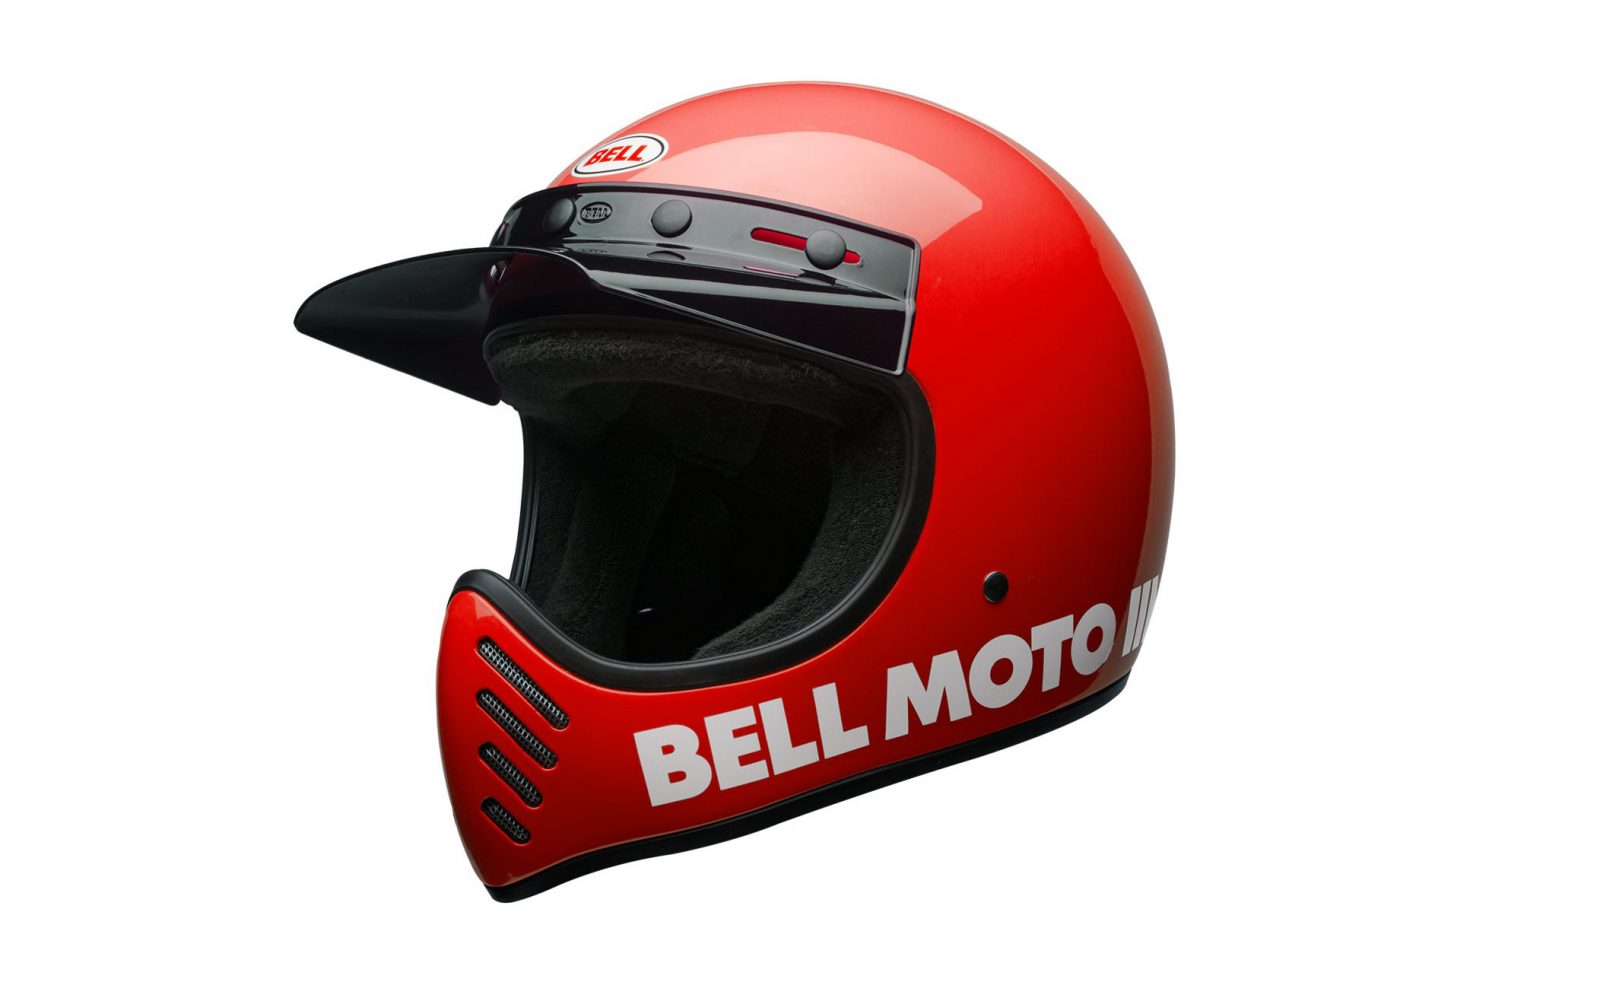 Bell Moto-3 Helmet Black